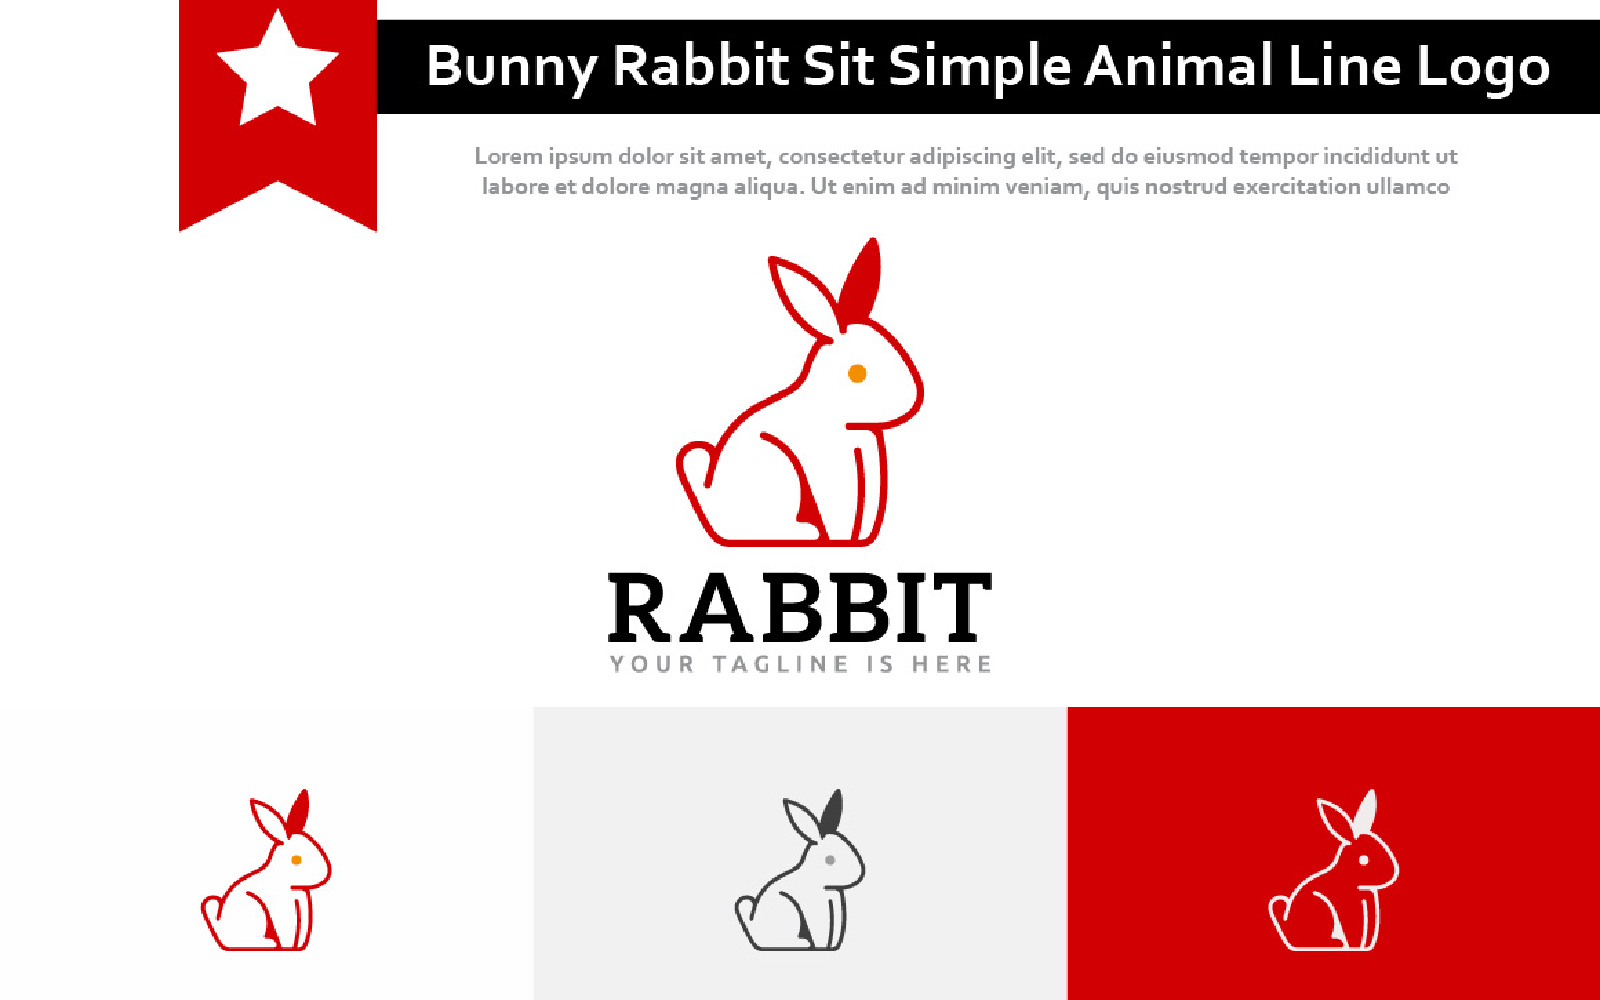 Bunny Rabbit Sit Simple Animal Line Logo